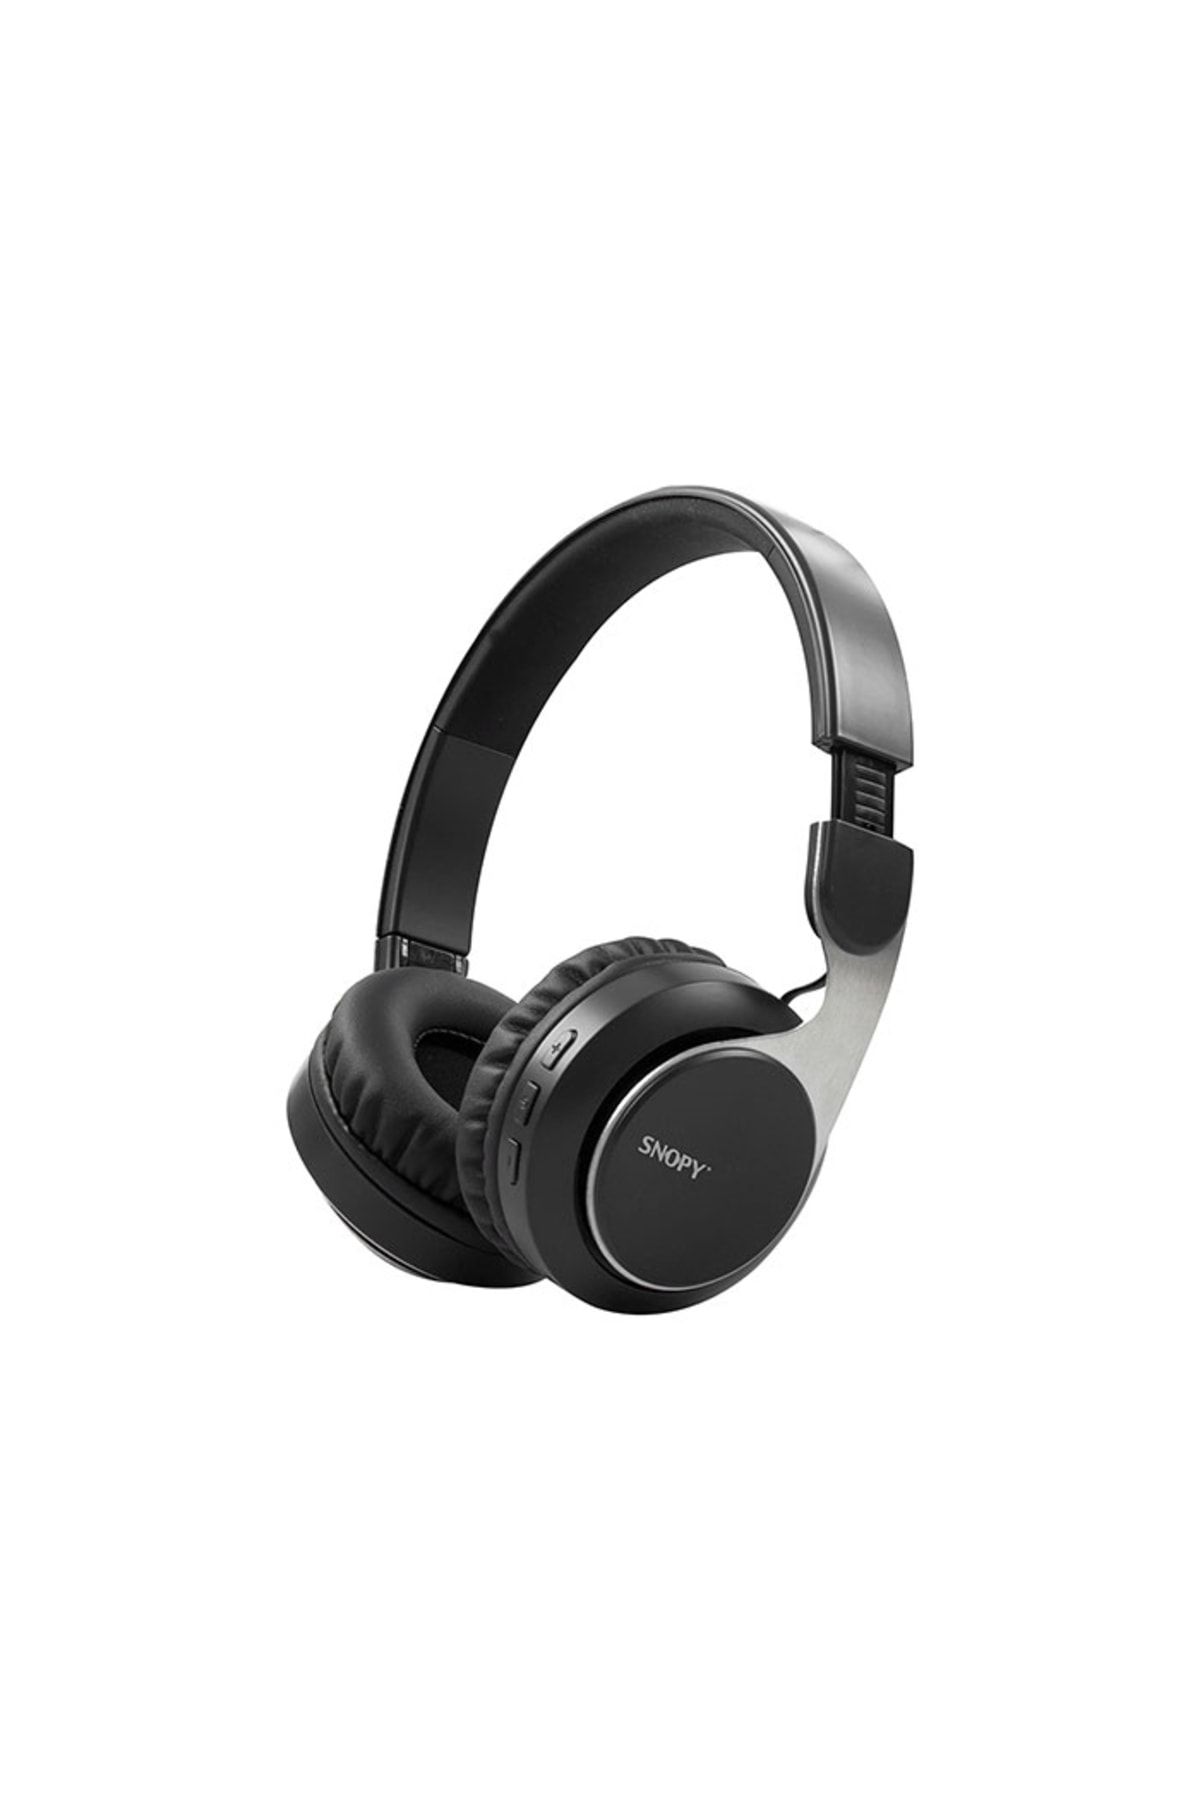 Snopy Sn-34bt Cosy Bluetooth Kulaklık Kablosuz Mikrofonlu Kulaklık Kablolu Ve Kablosuz Kullanım